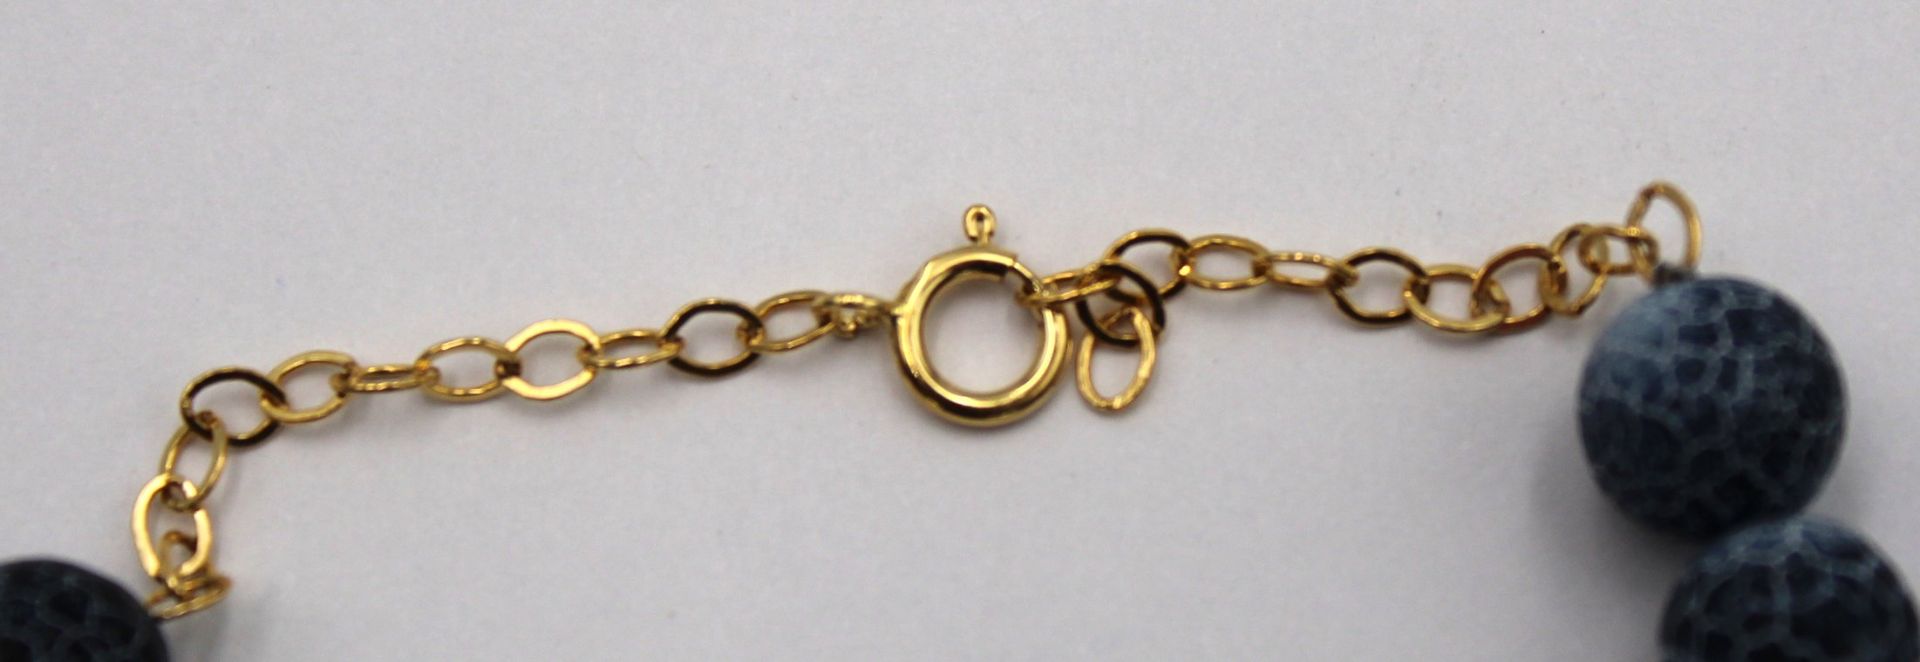 Halskette, Achat, vergoldetet Schließe, L-40cm. - Image 3 of 3